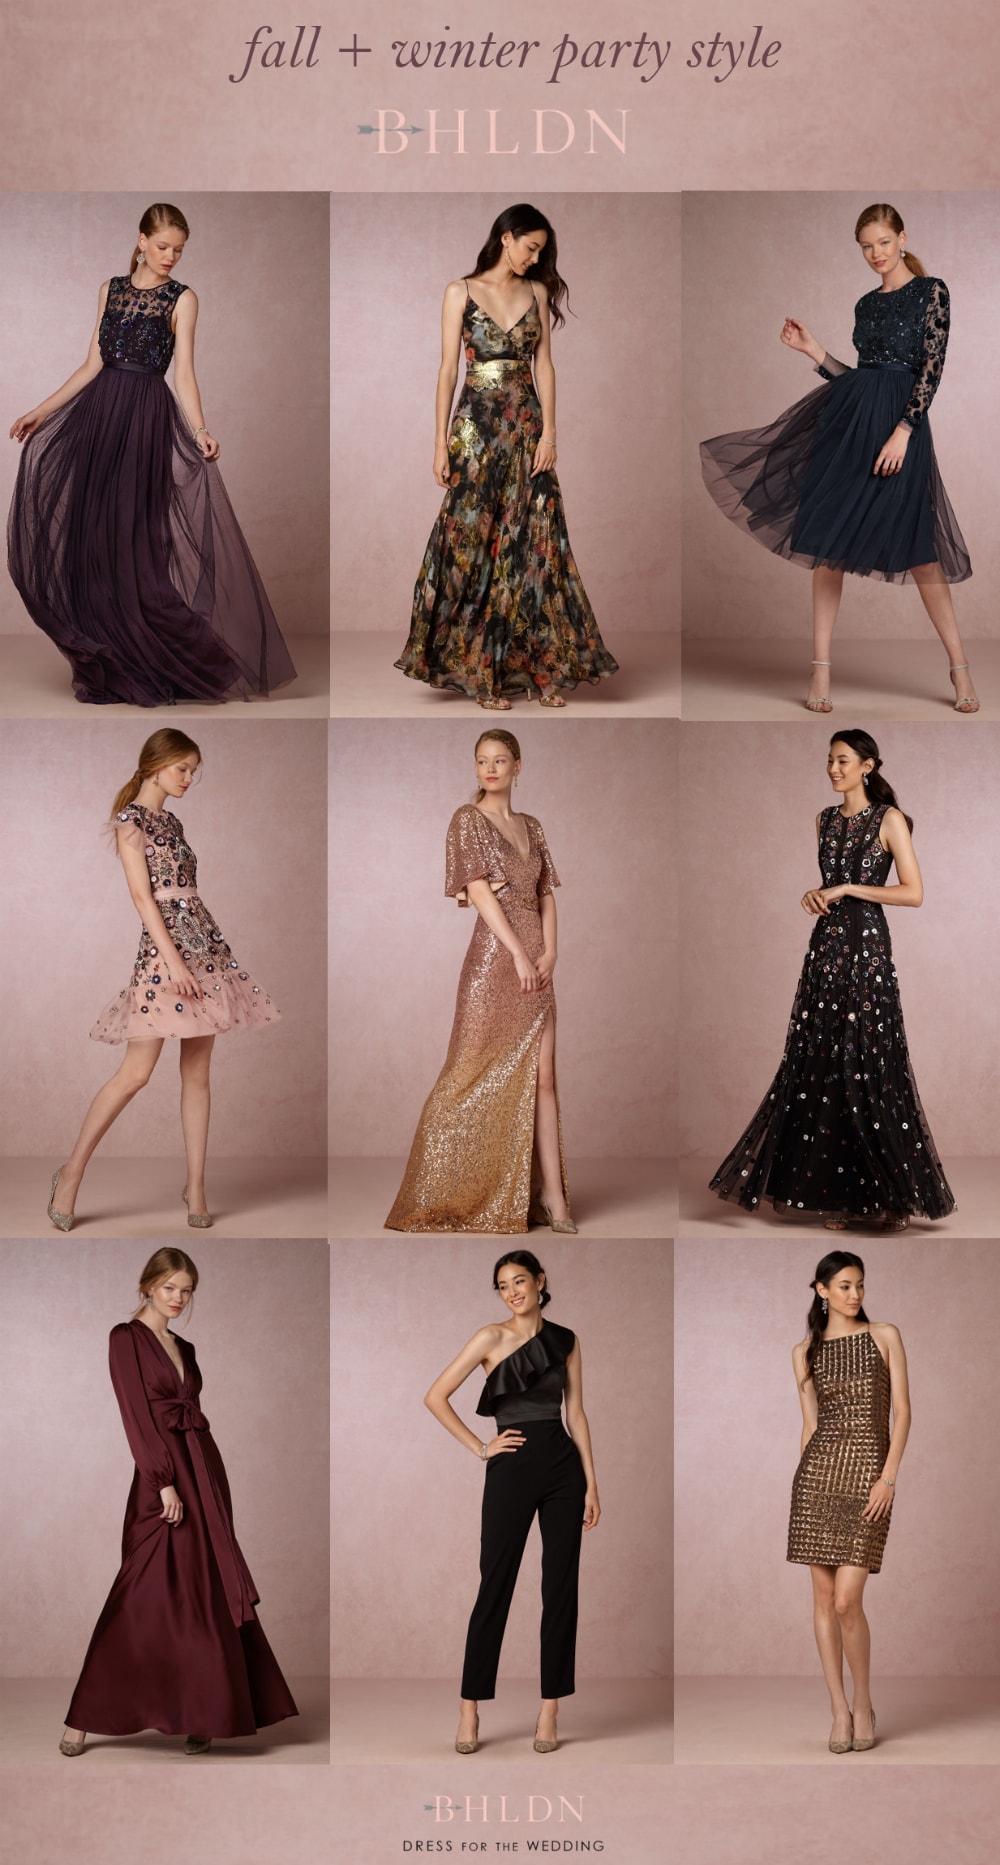 Maria B Velvet Formal Winter Party Wear Dresses Collection (12) -  StylesGap.com